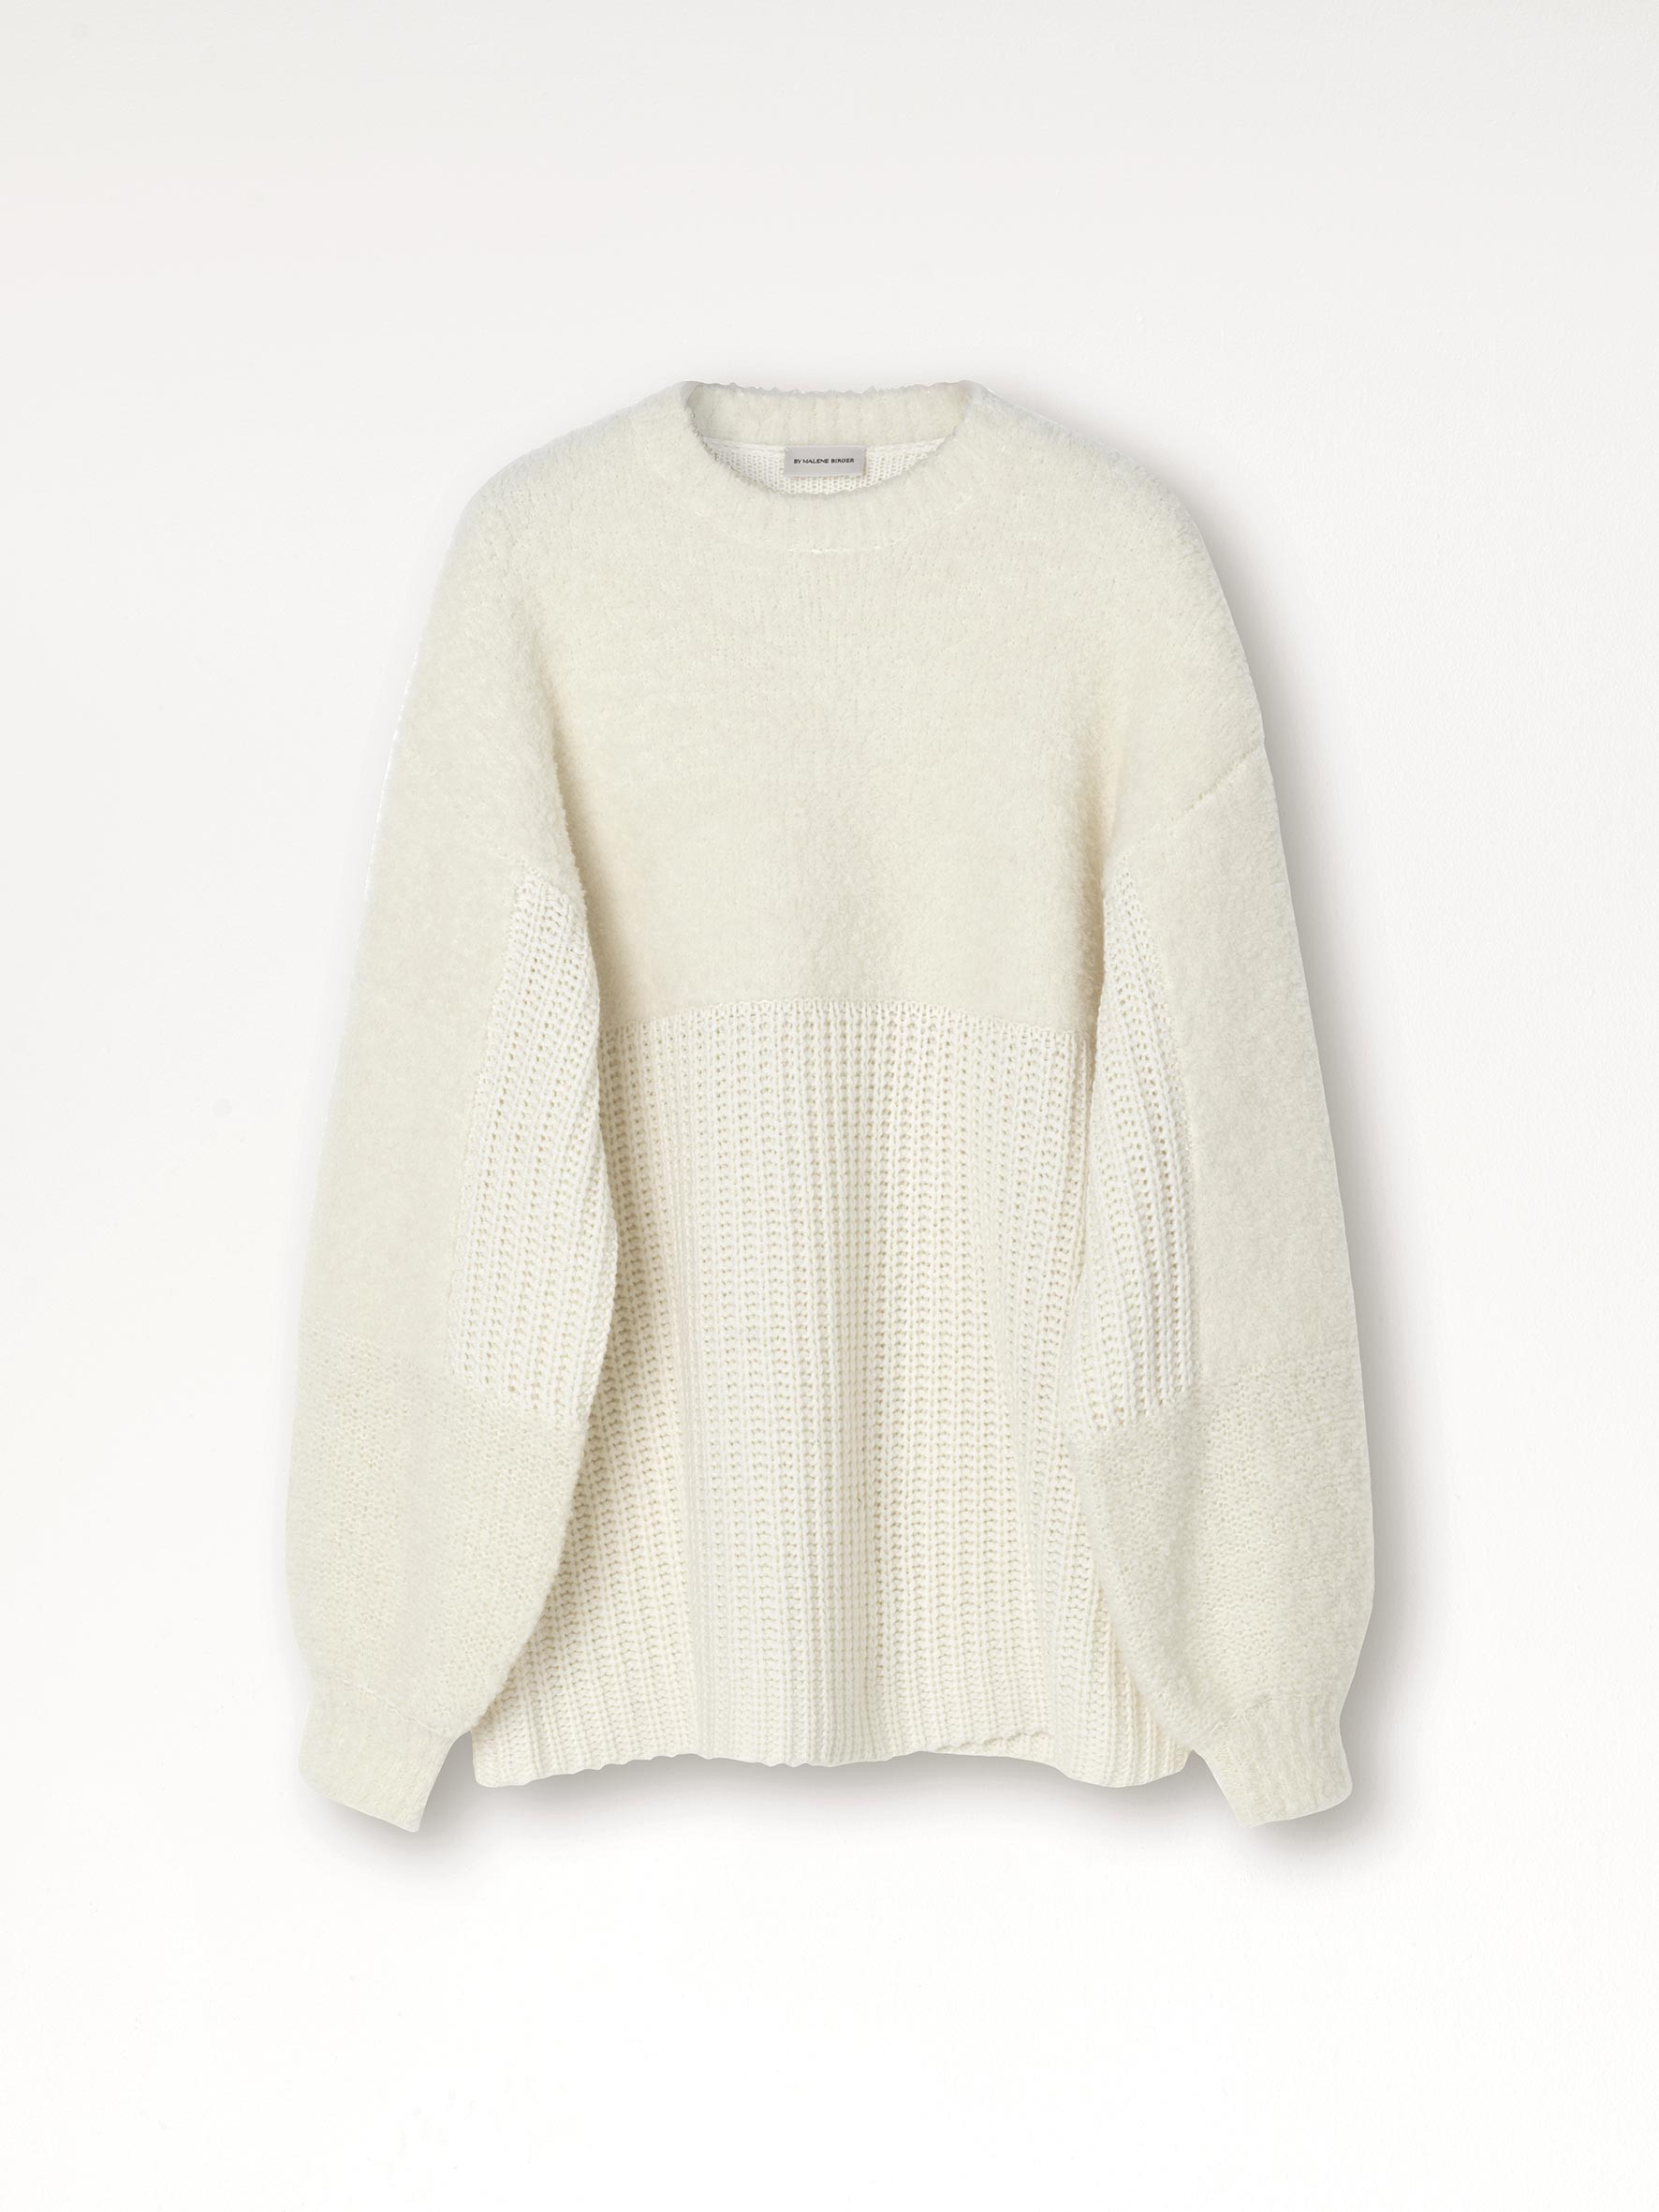 Joannas sweater - Buy Archive online